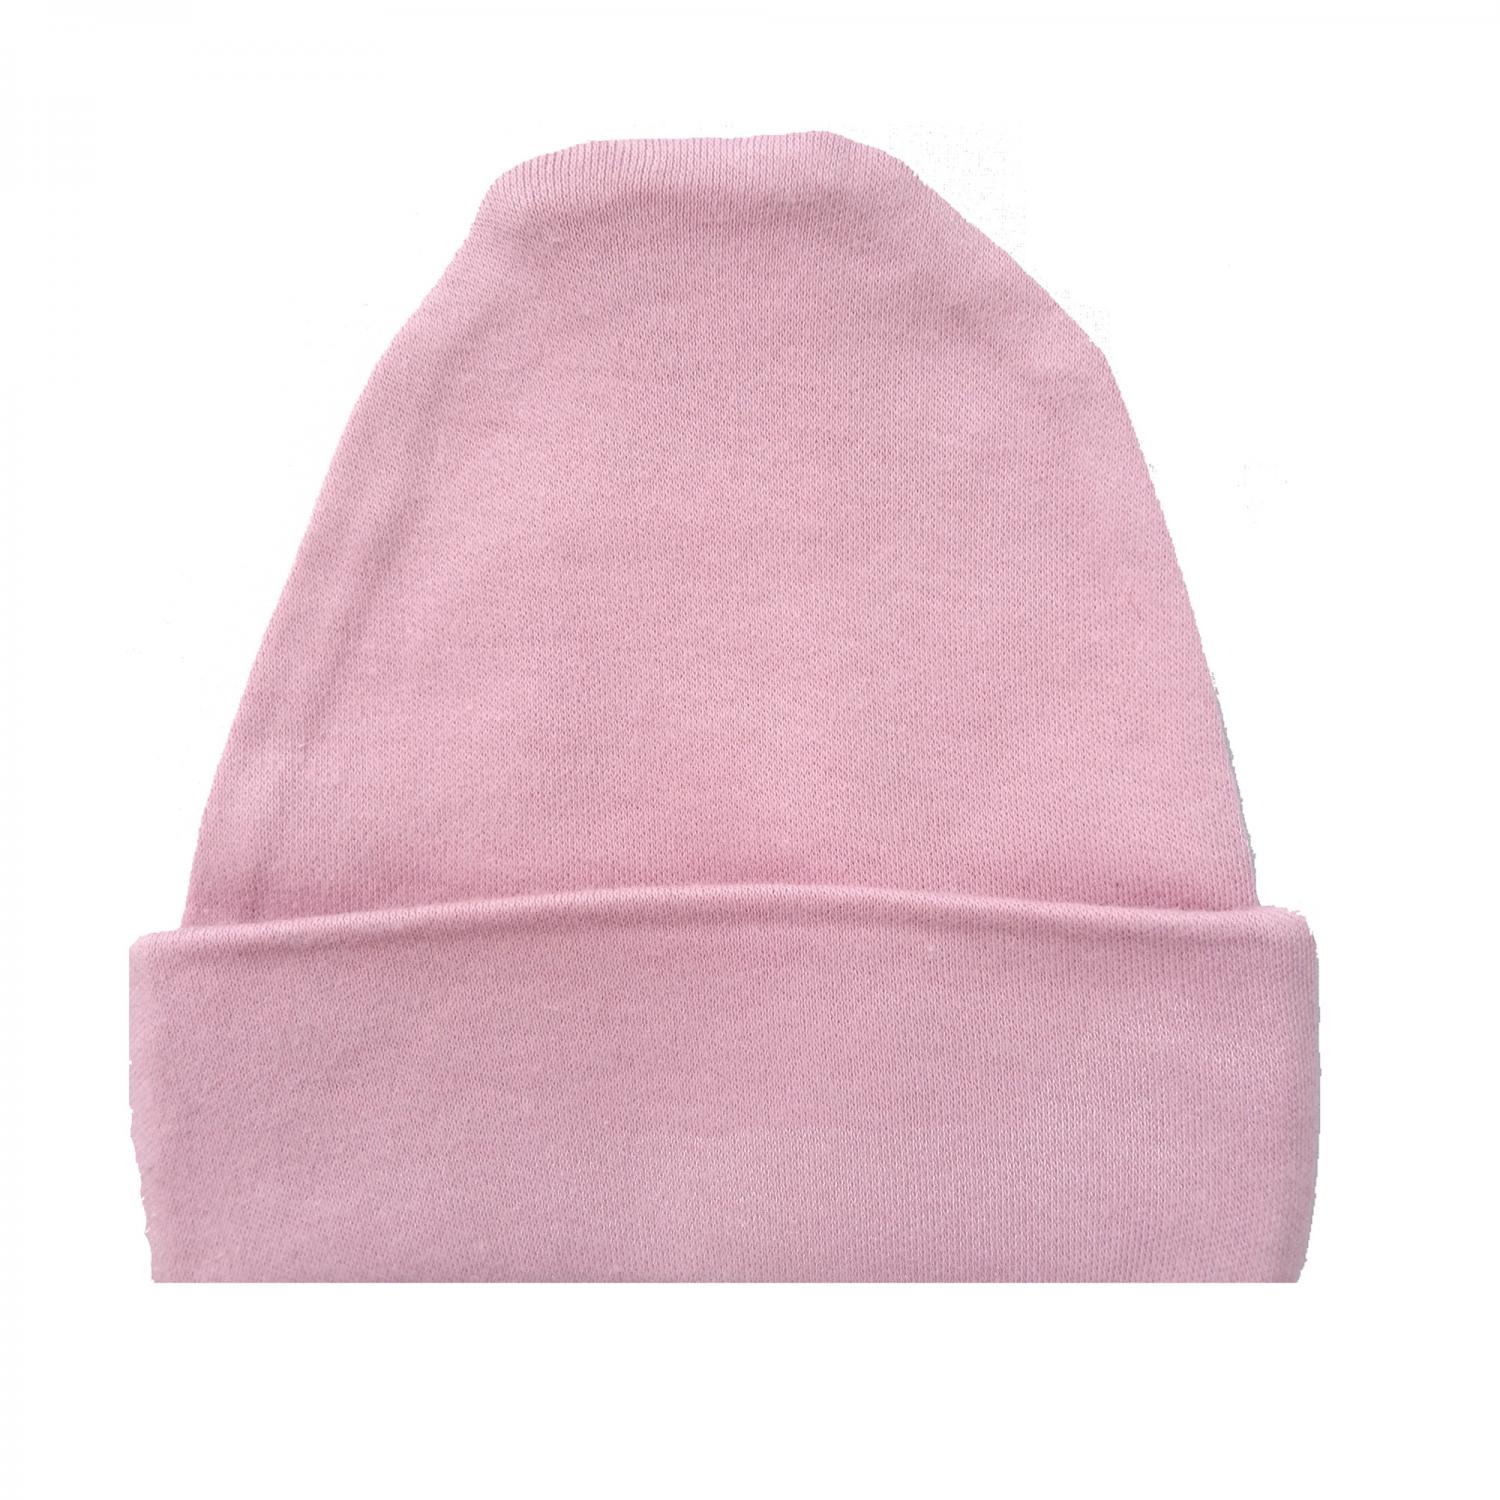 Hat soft pink 0-3 months GOTS